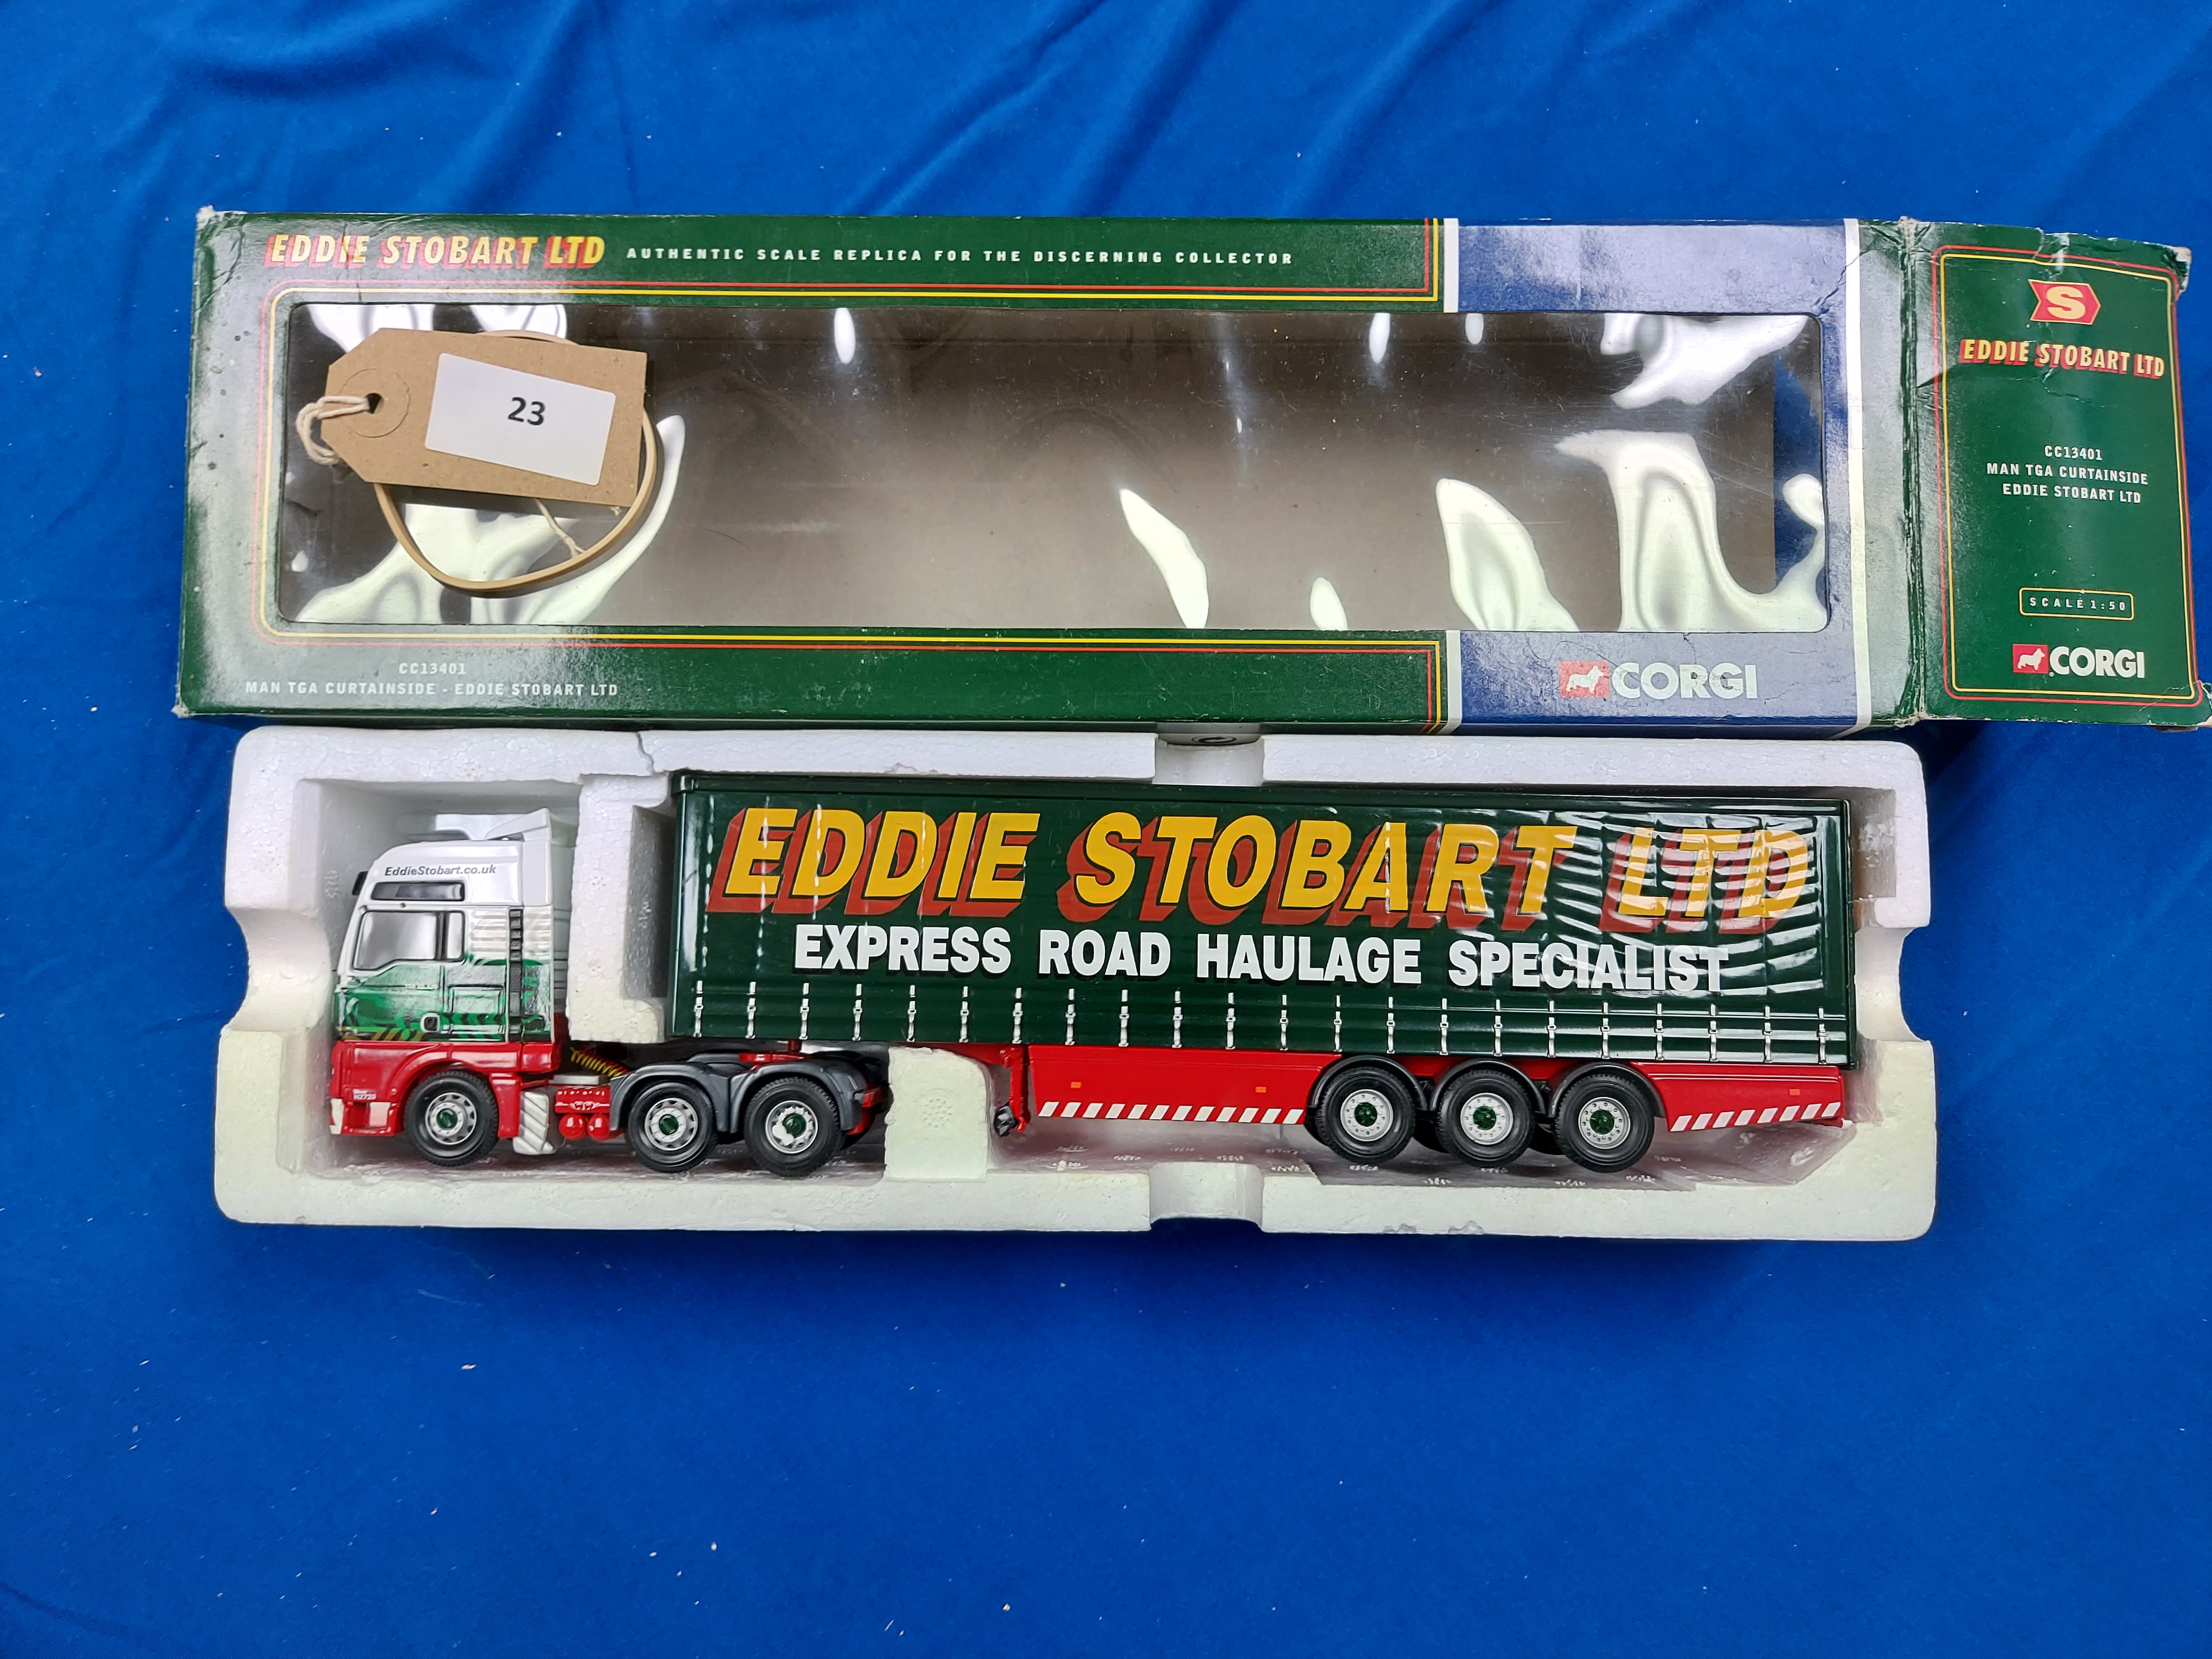 Corgi MAN TGA Curtainside - Eddie Stobart Ltd - Fair - Box worn